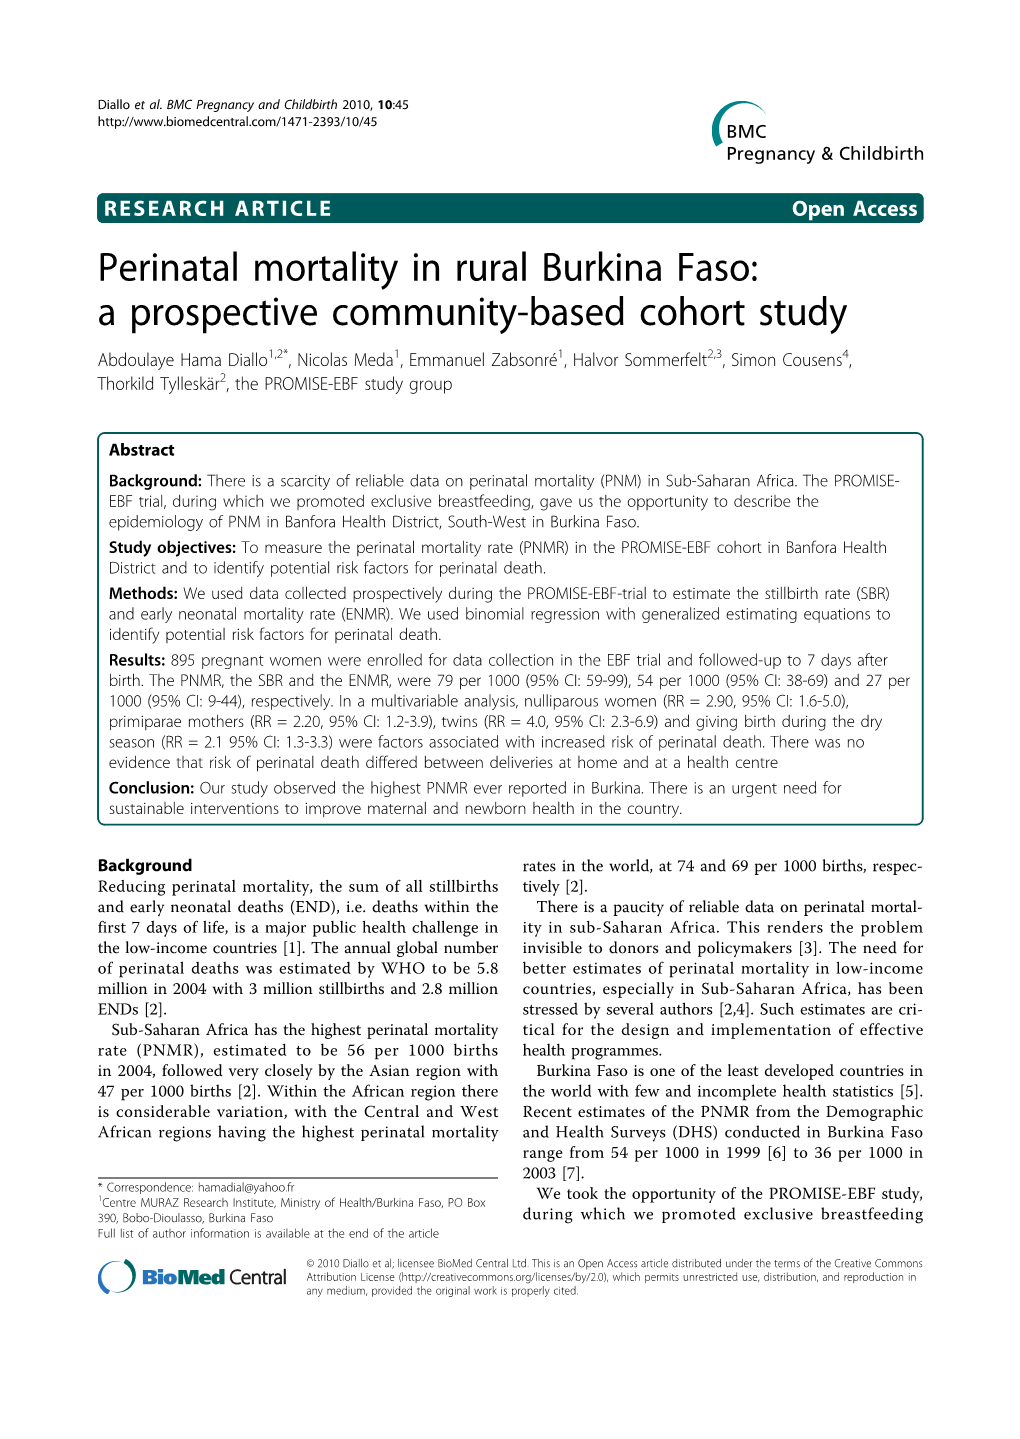 Perinatal Mortality in Rural Burkina Faso: a Prospective Community-Based Cohort Study